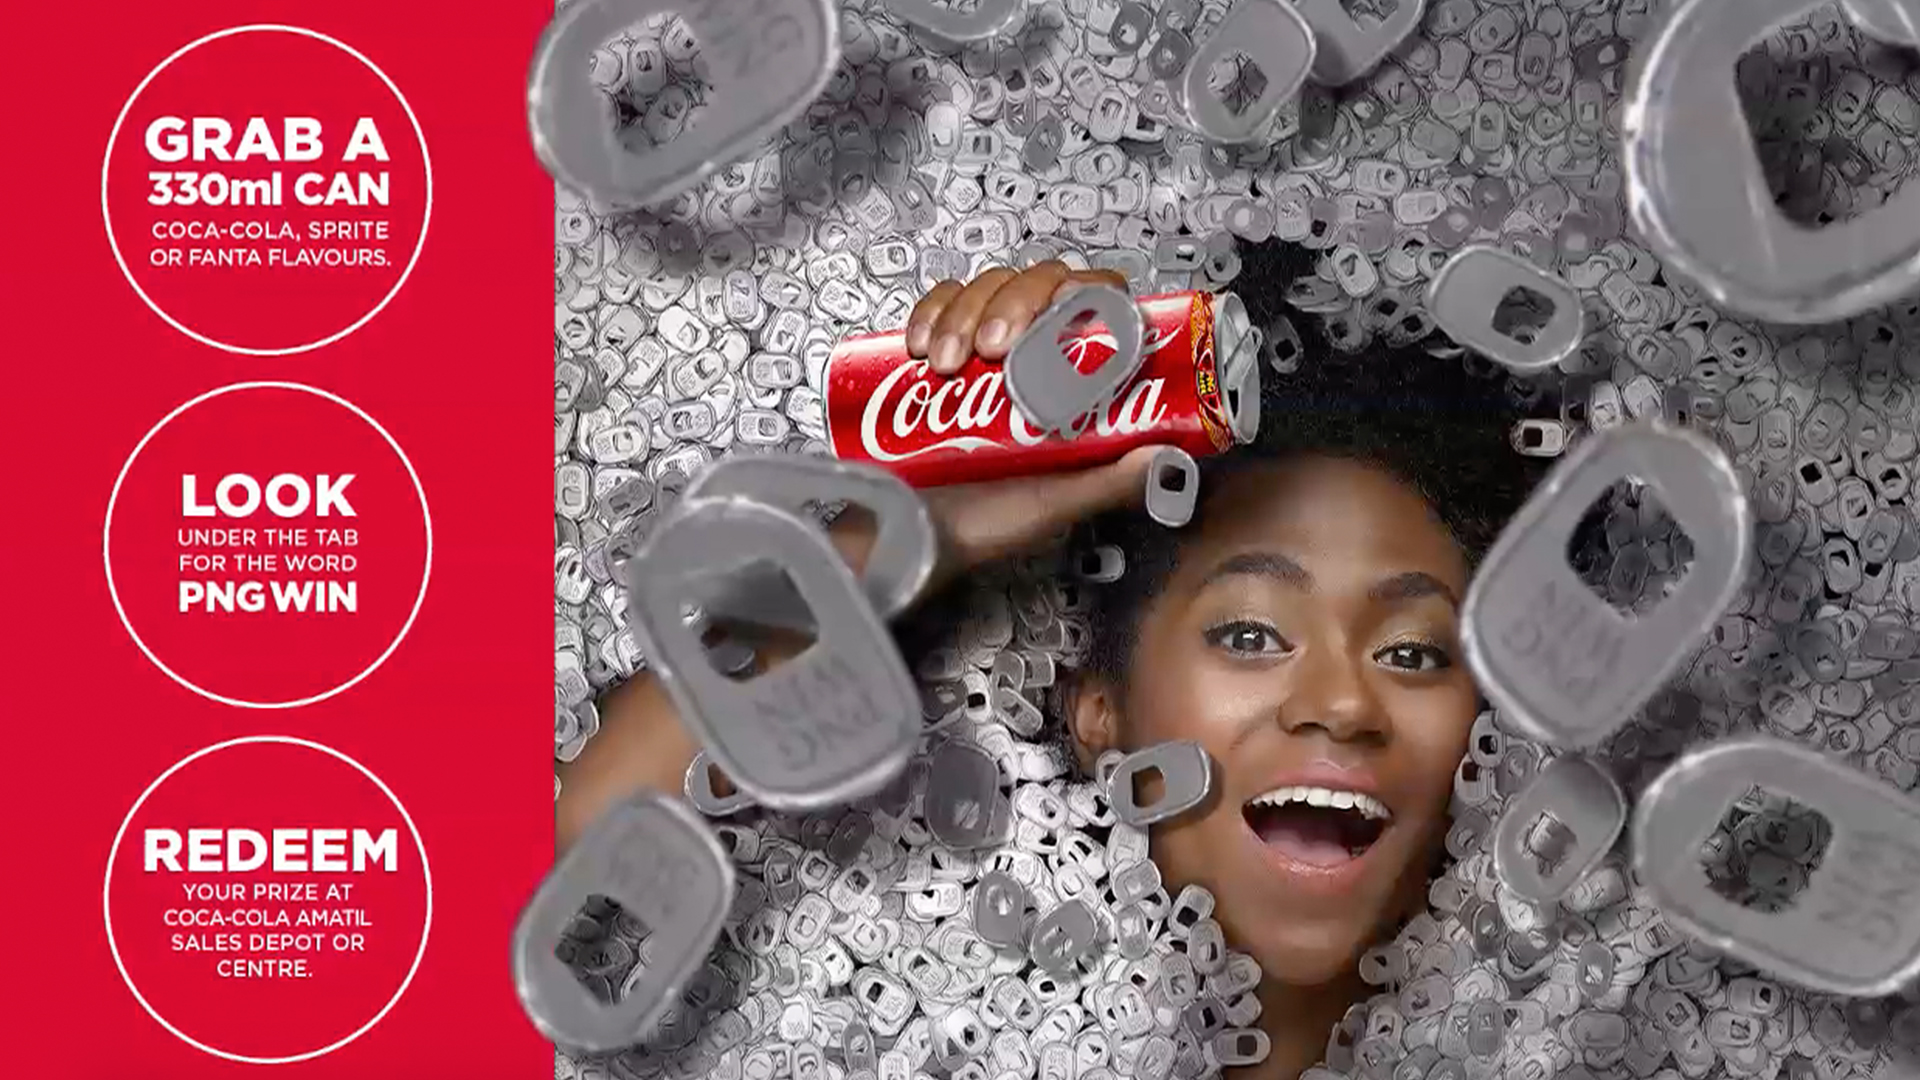 Coca-cola Sparkling promo